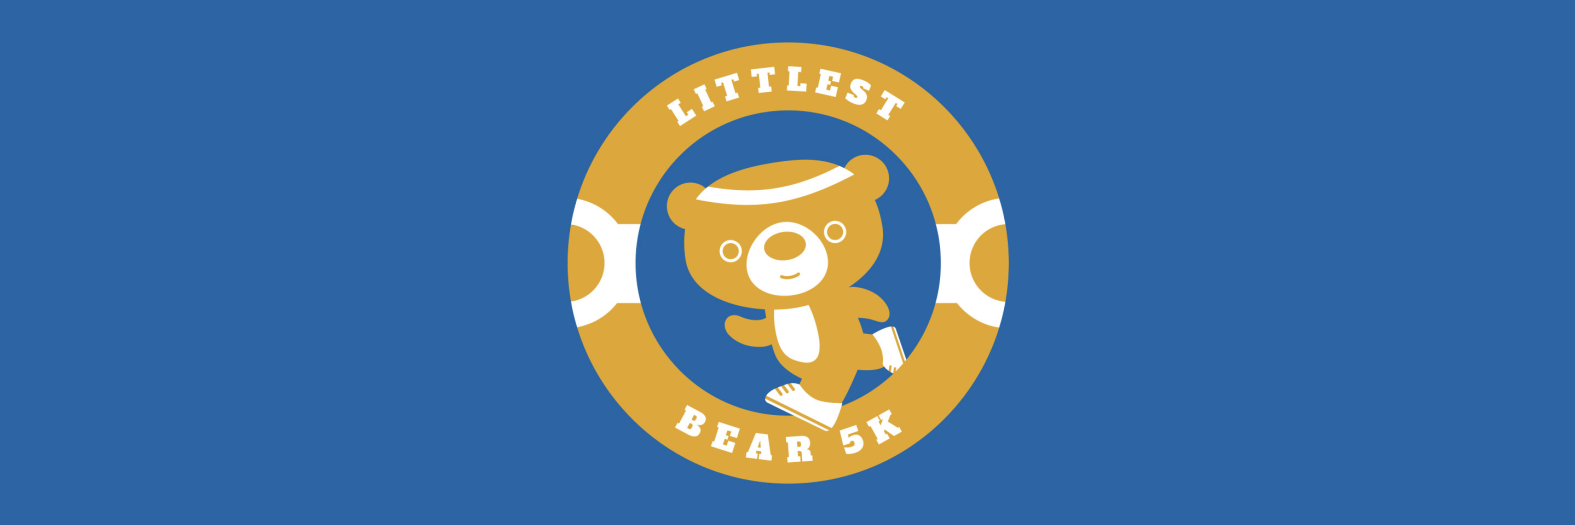 littlestbear-5k-2020-banner.png